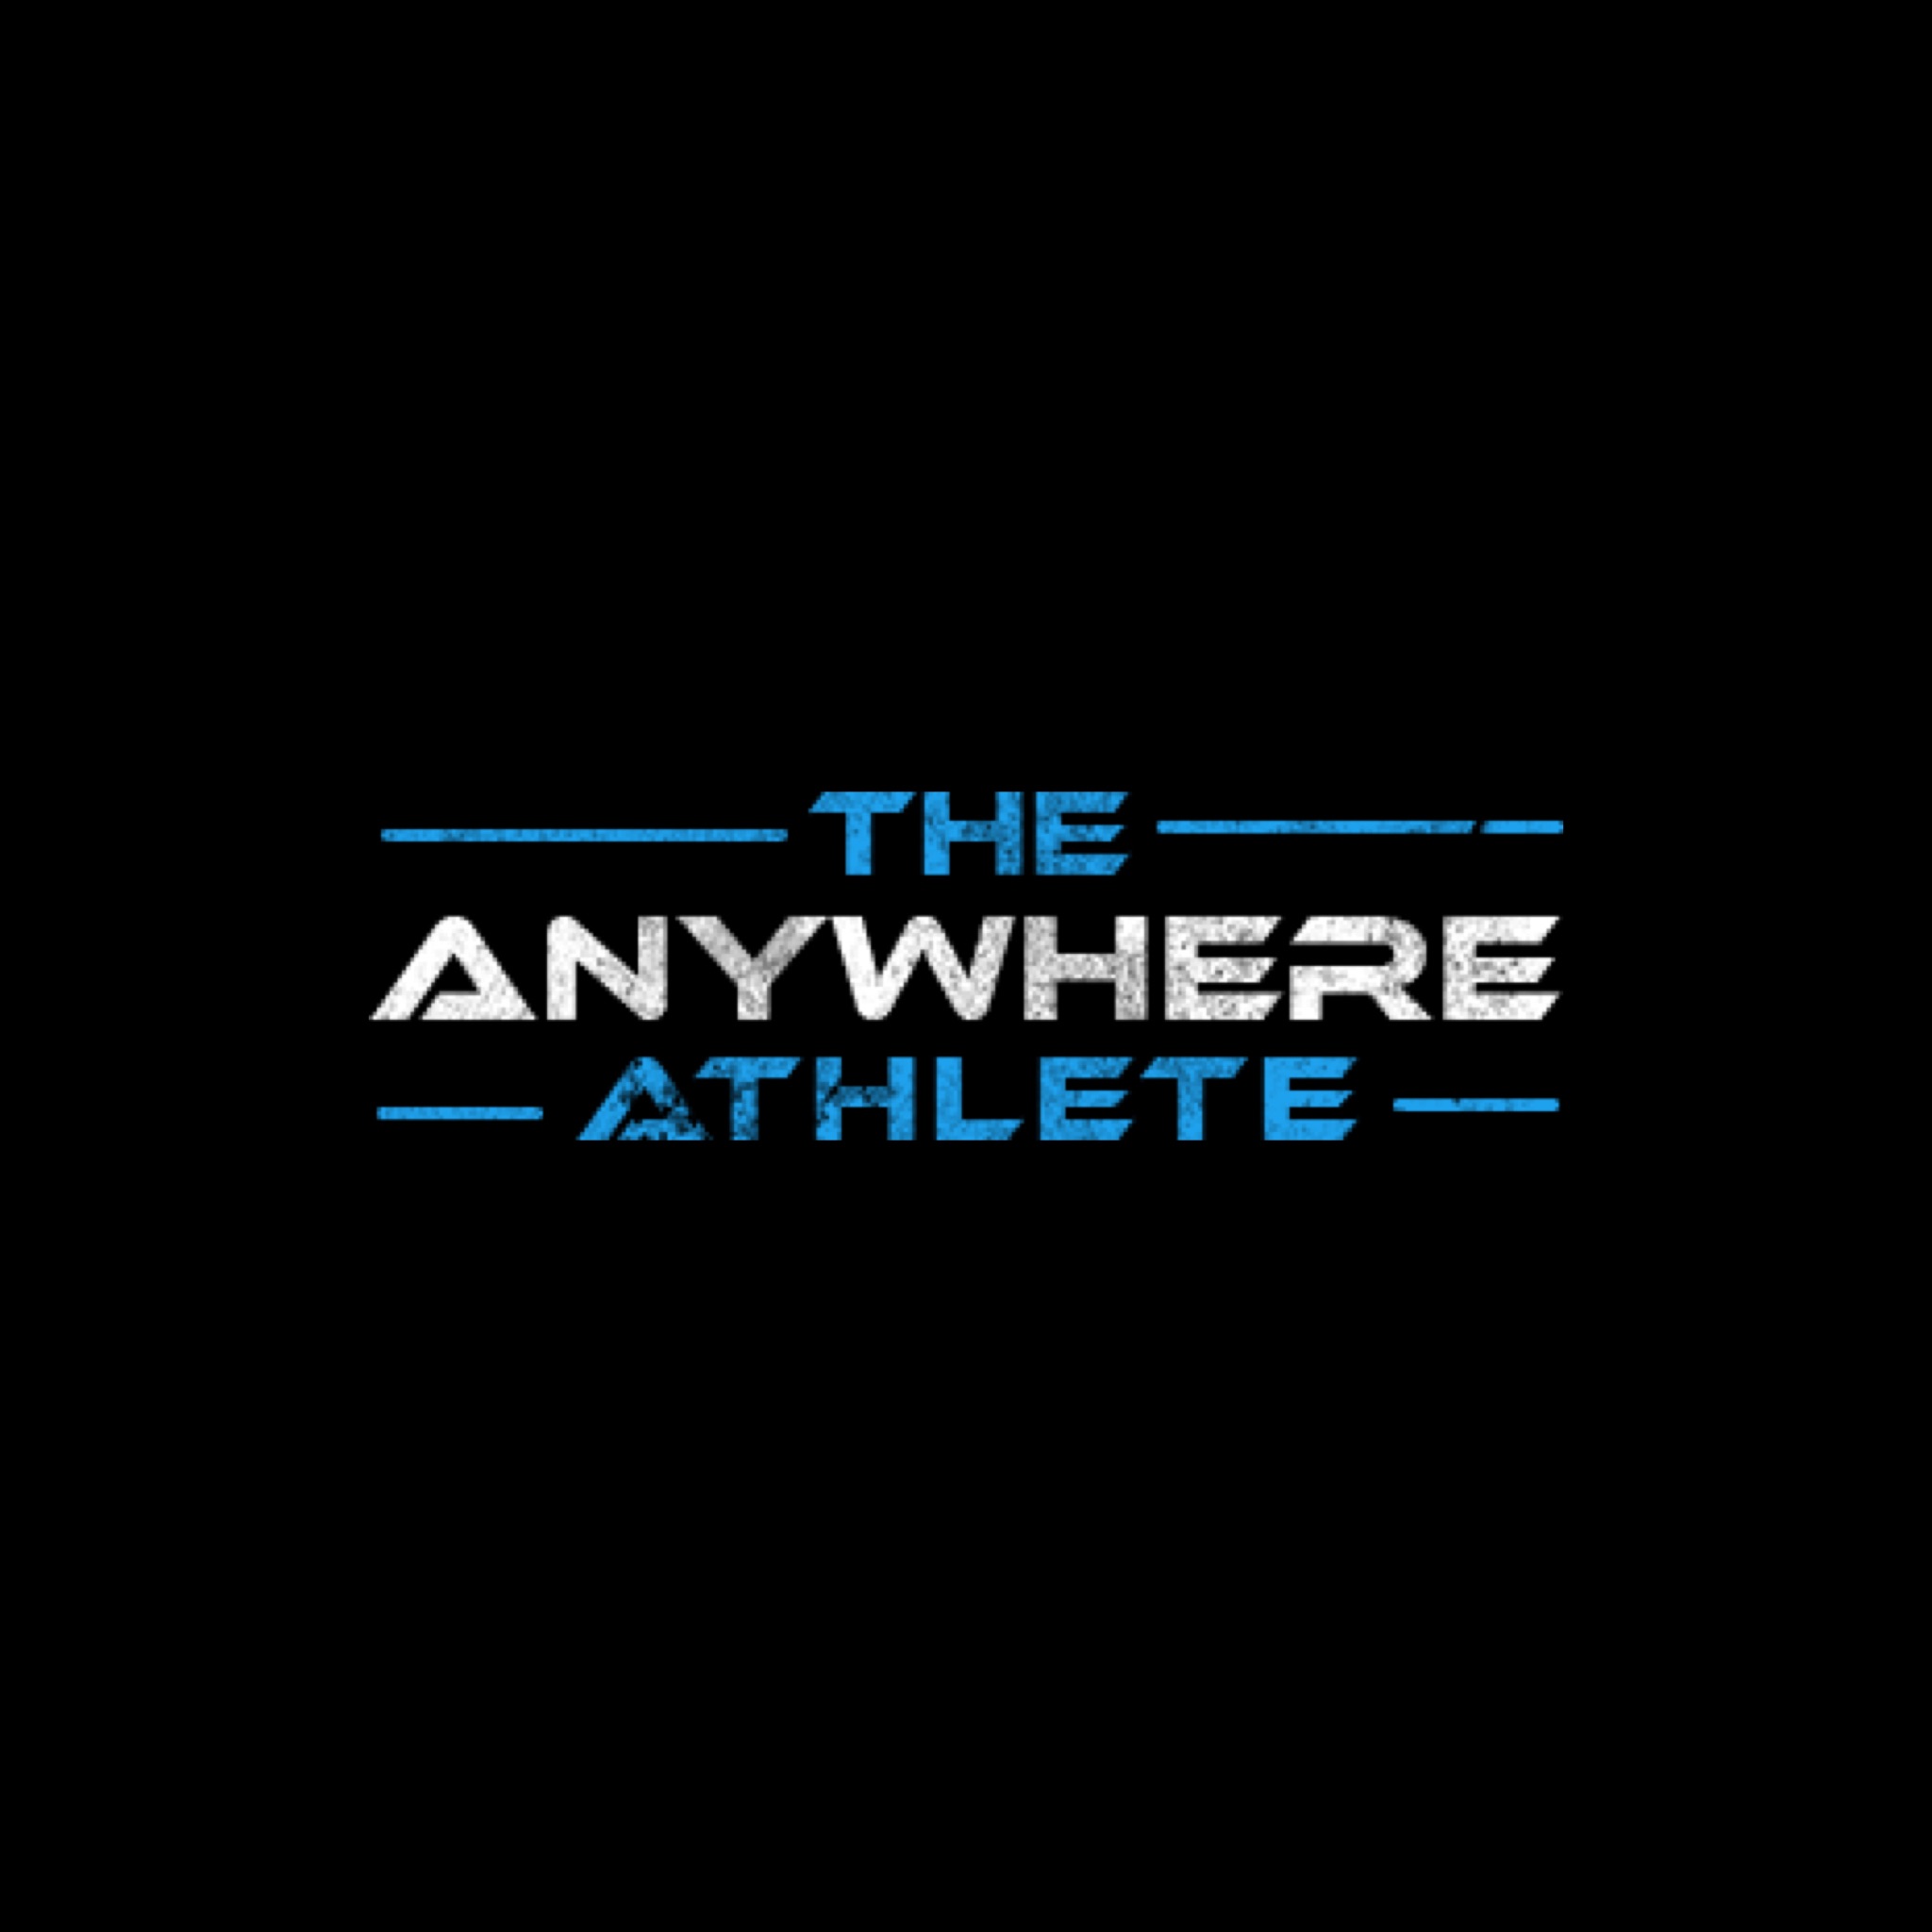 The Anywhere Athlete